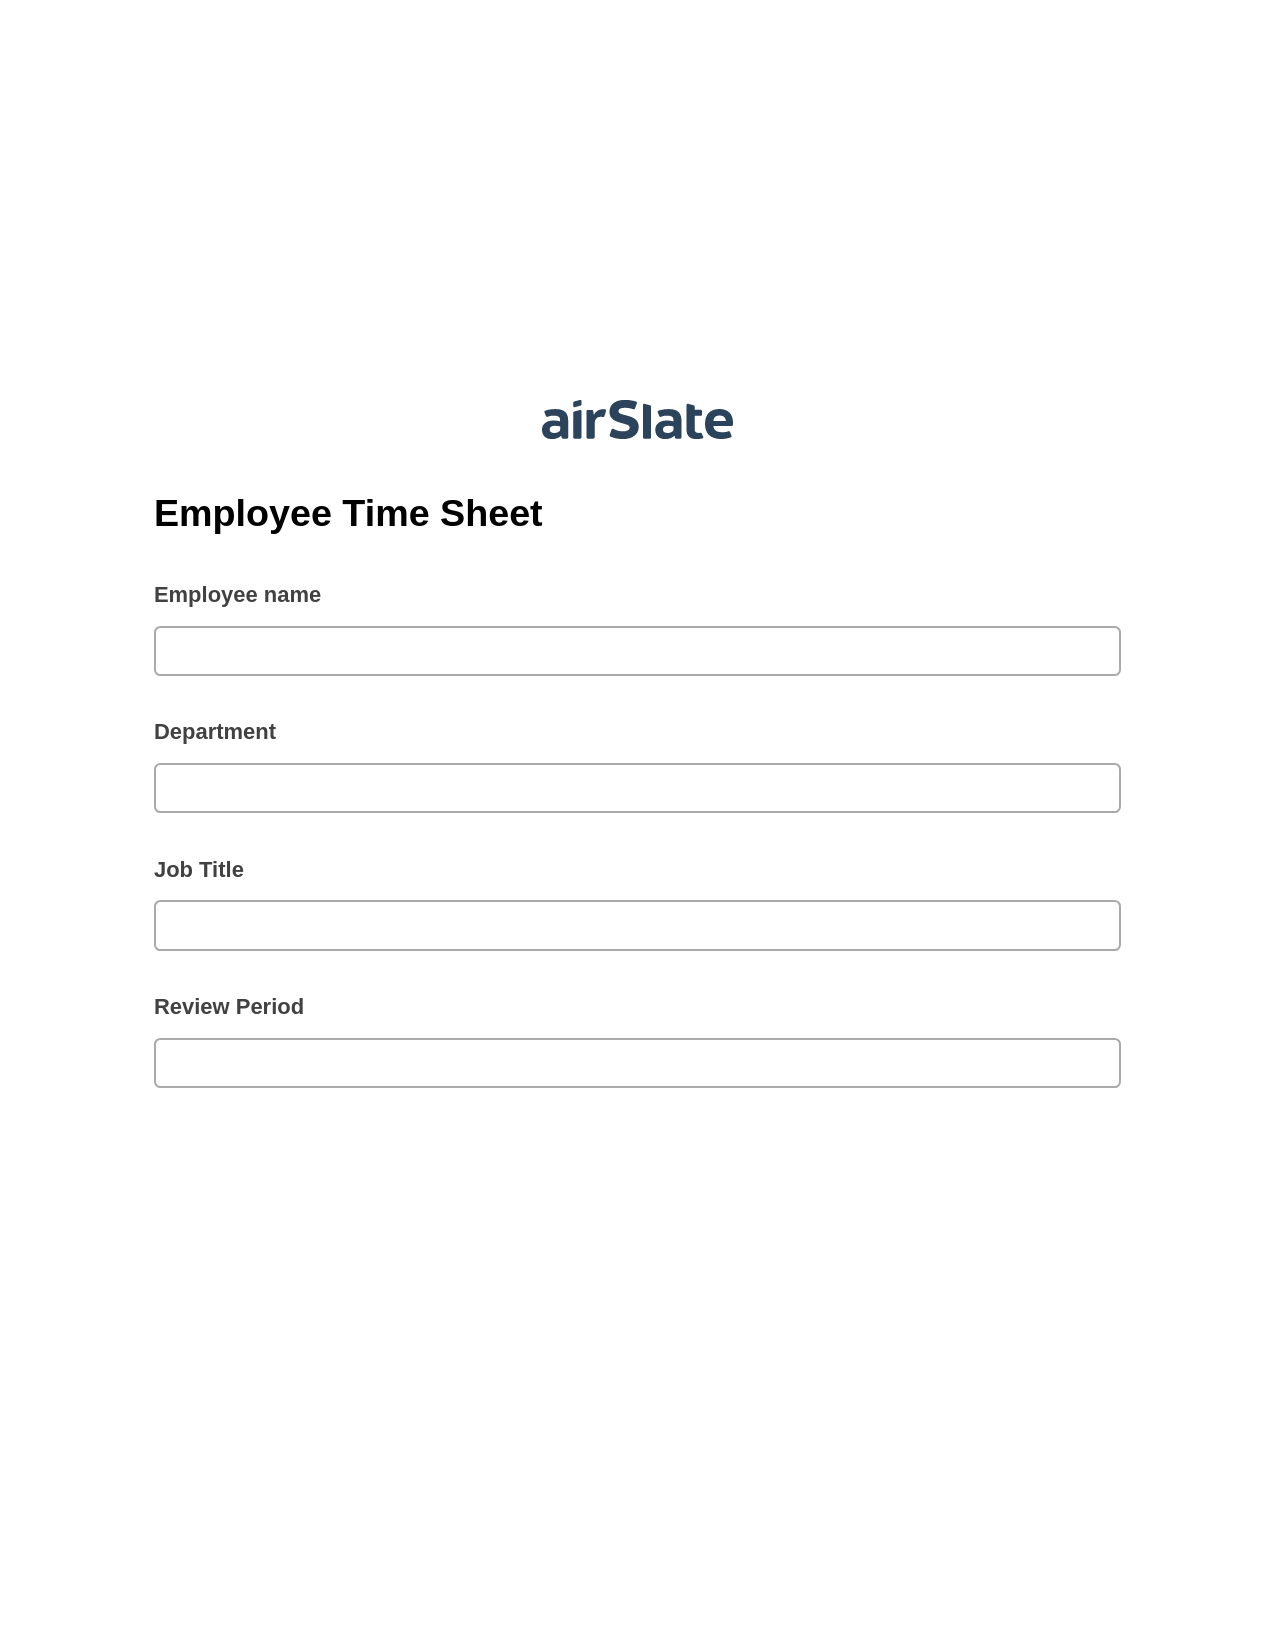 Employee Time Sheet Pre-fill from MySQL Bot, Create slate addon, Slack Notification Postfinish Bot